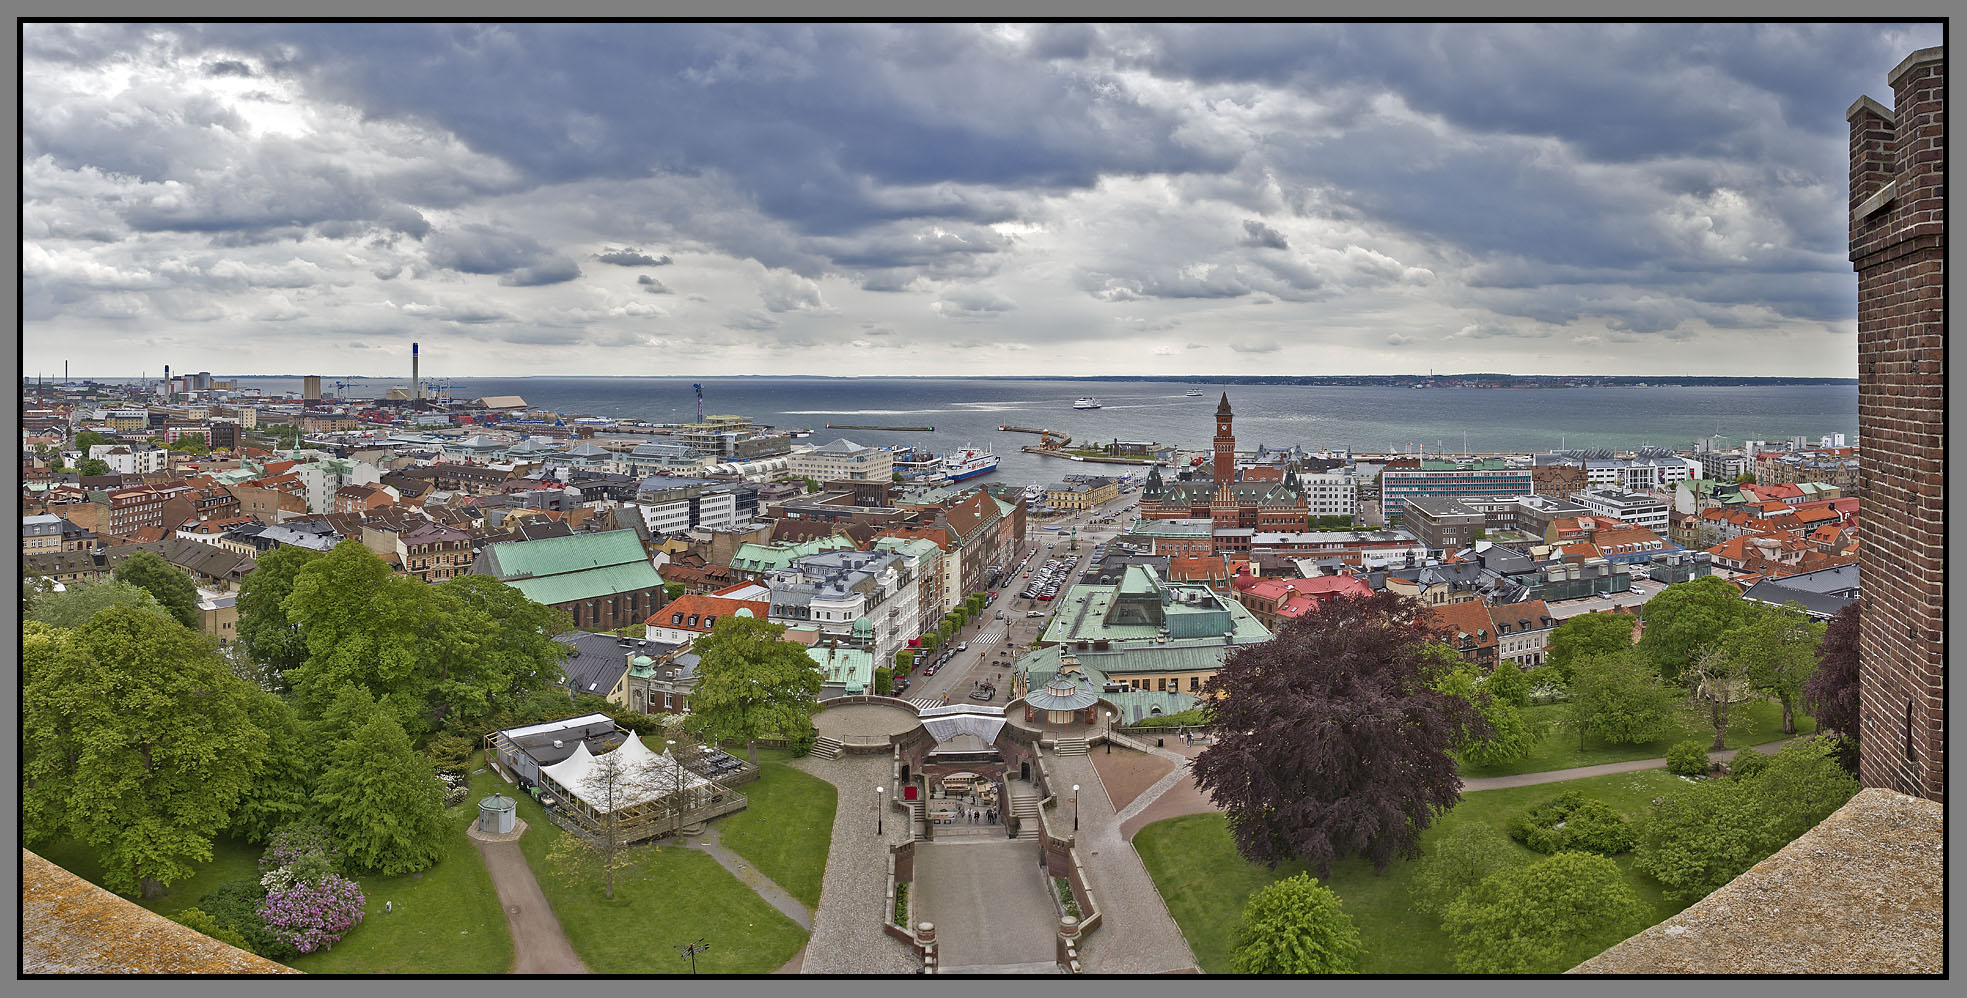 Sweden, Helsingborg; Karnan Tower - view from the top